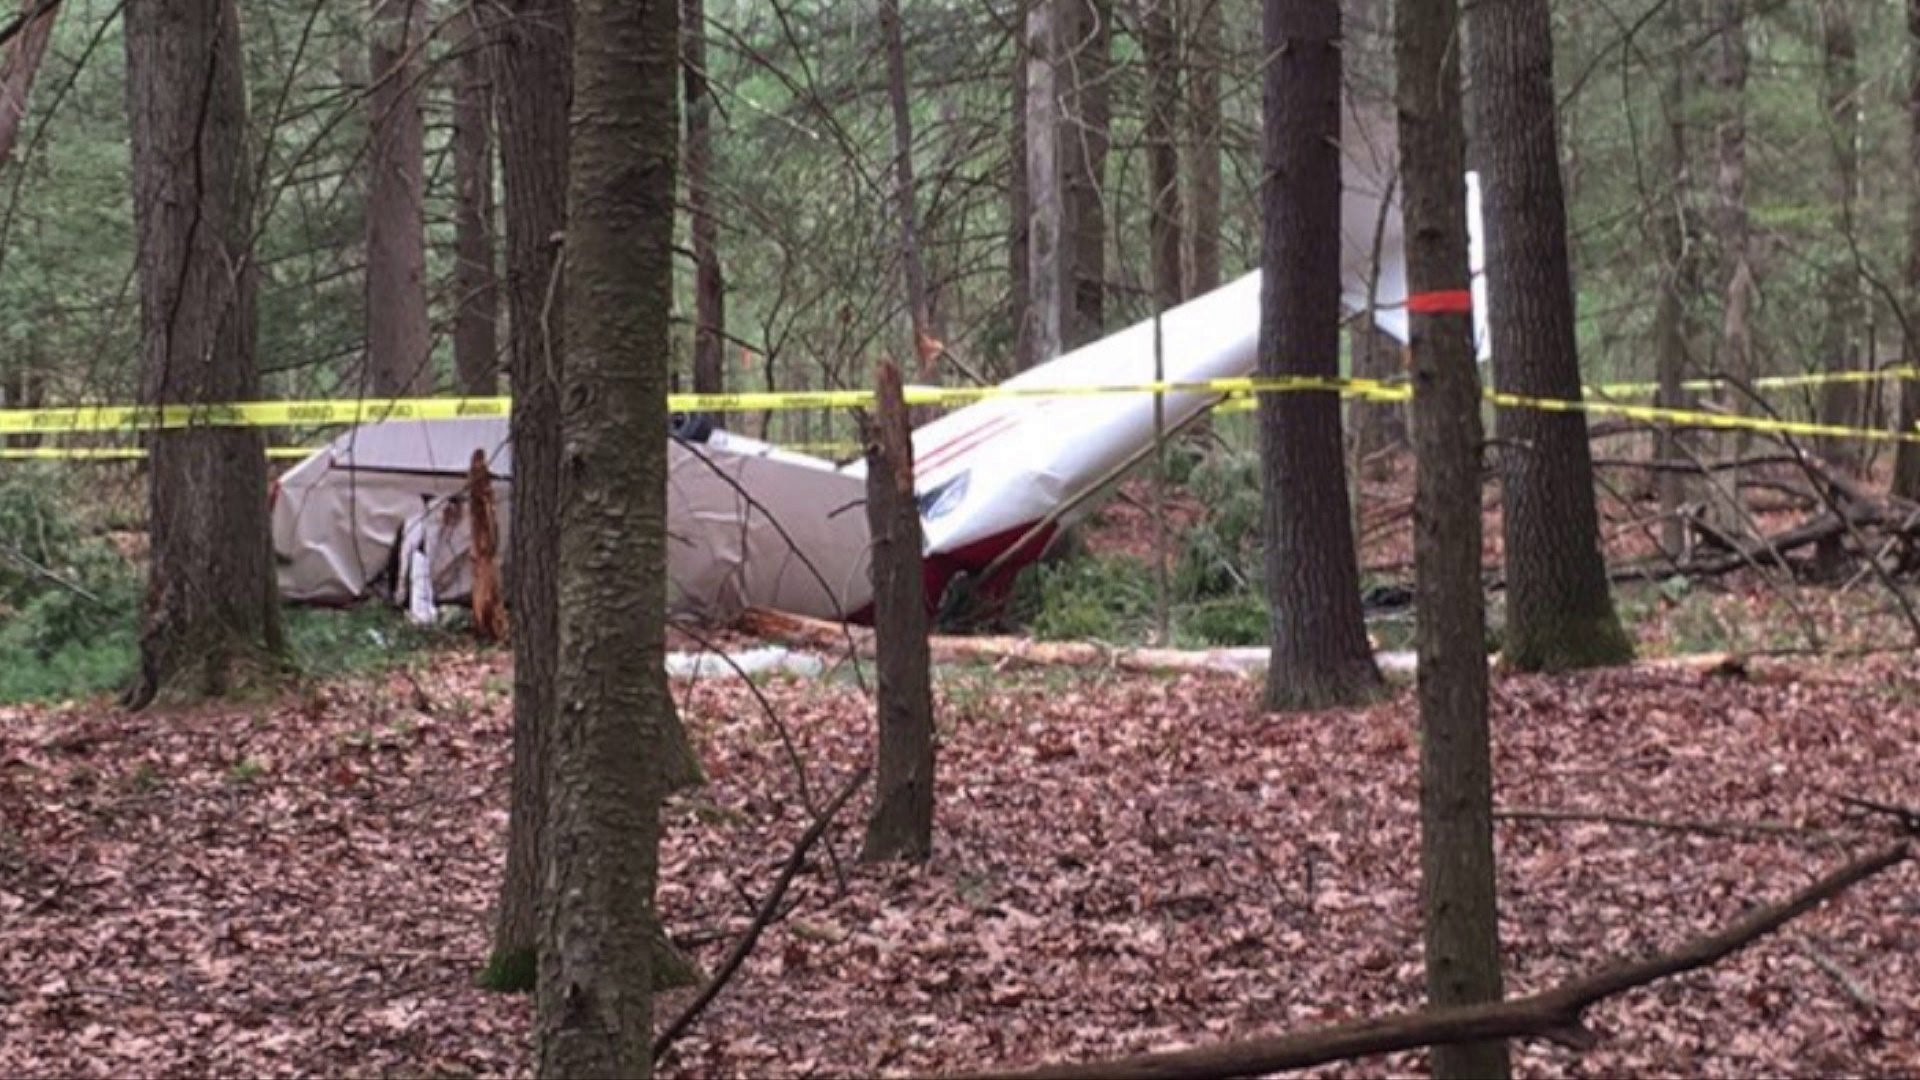 911 calls from deadly East Windsor plane crash released